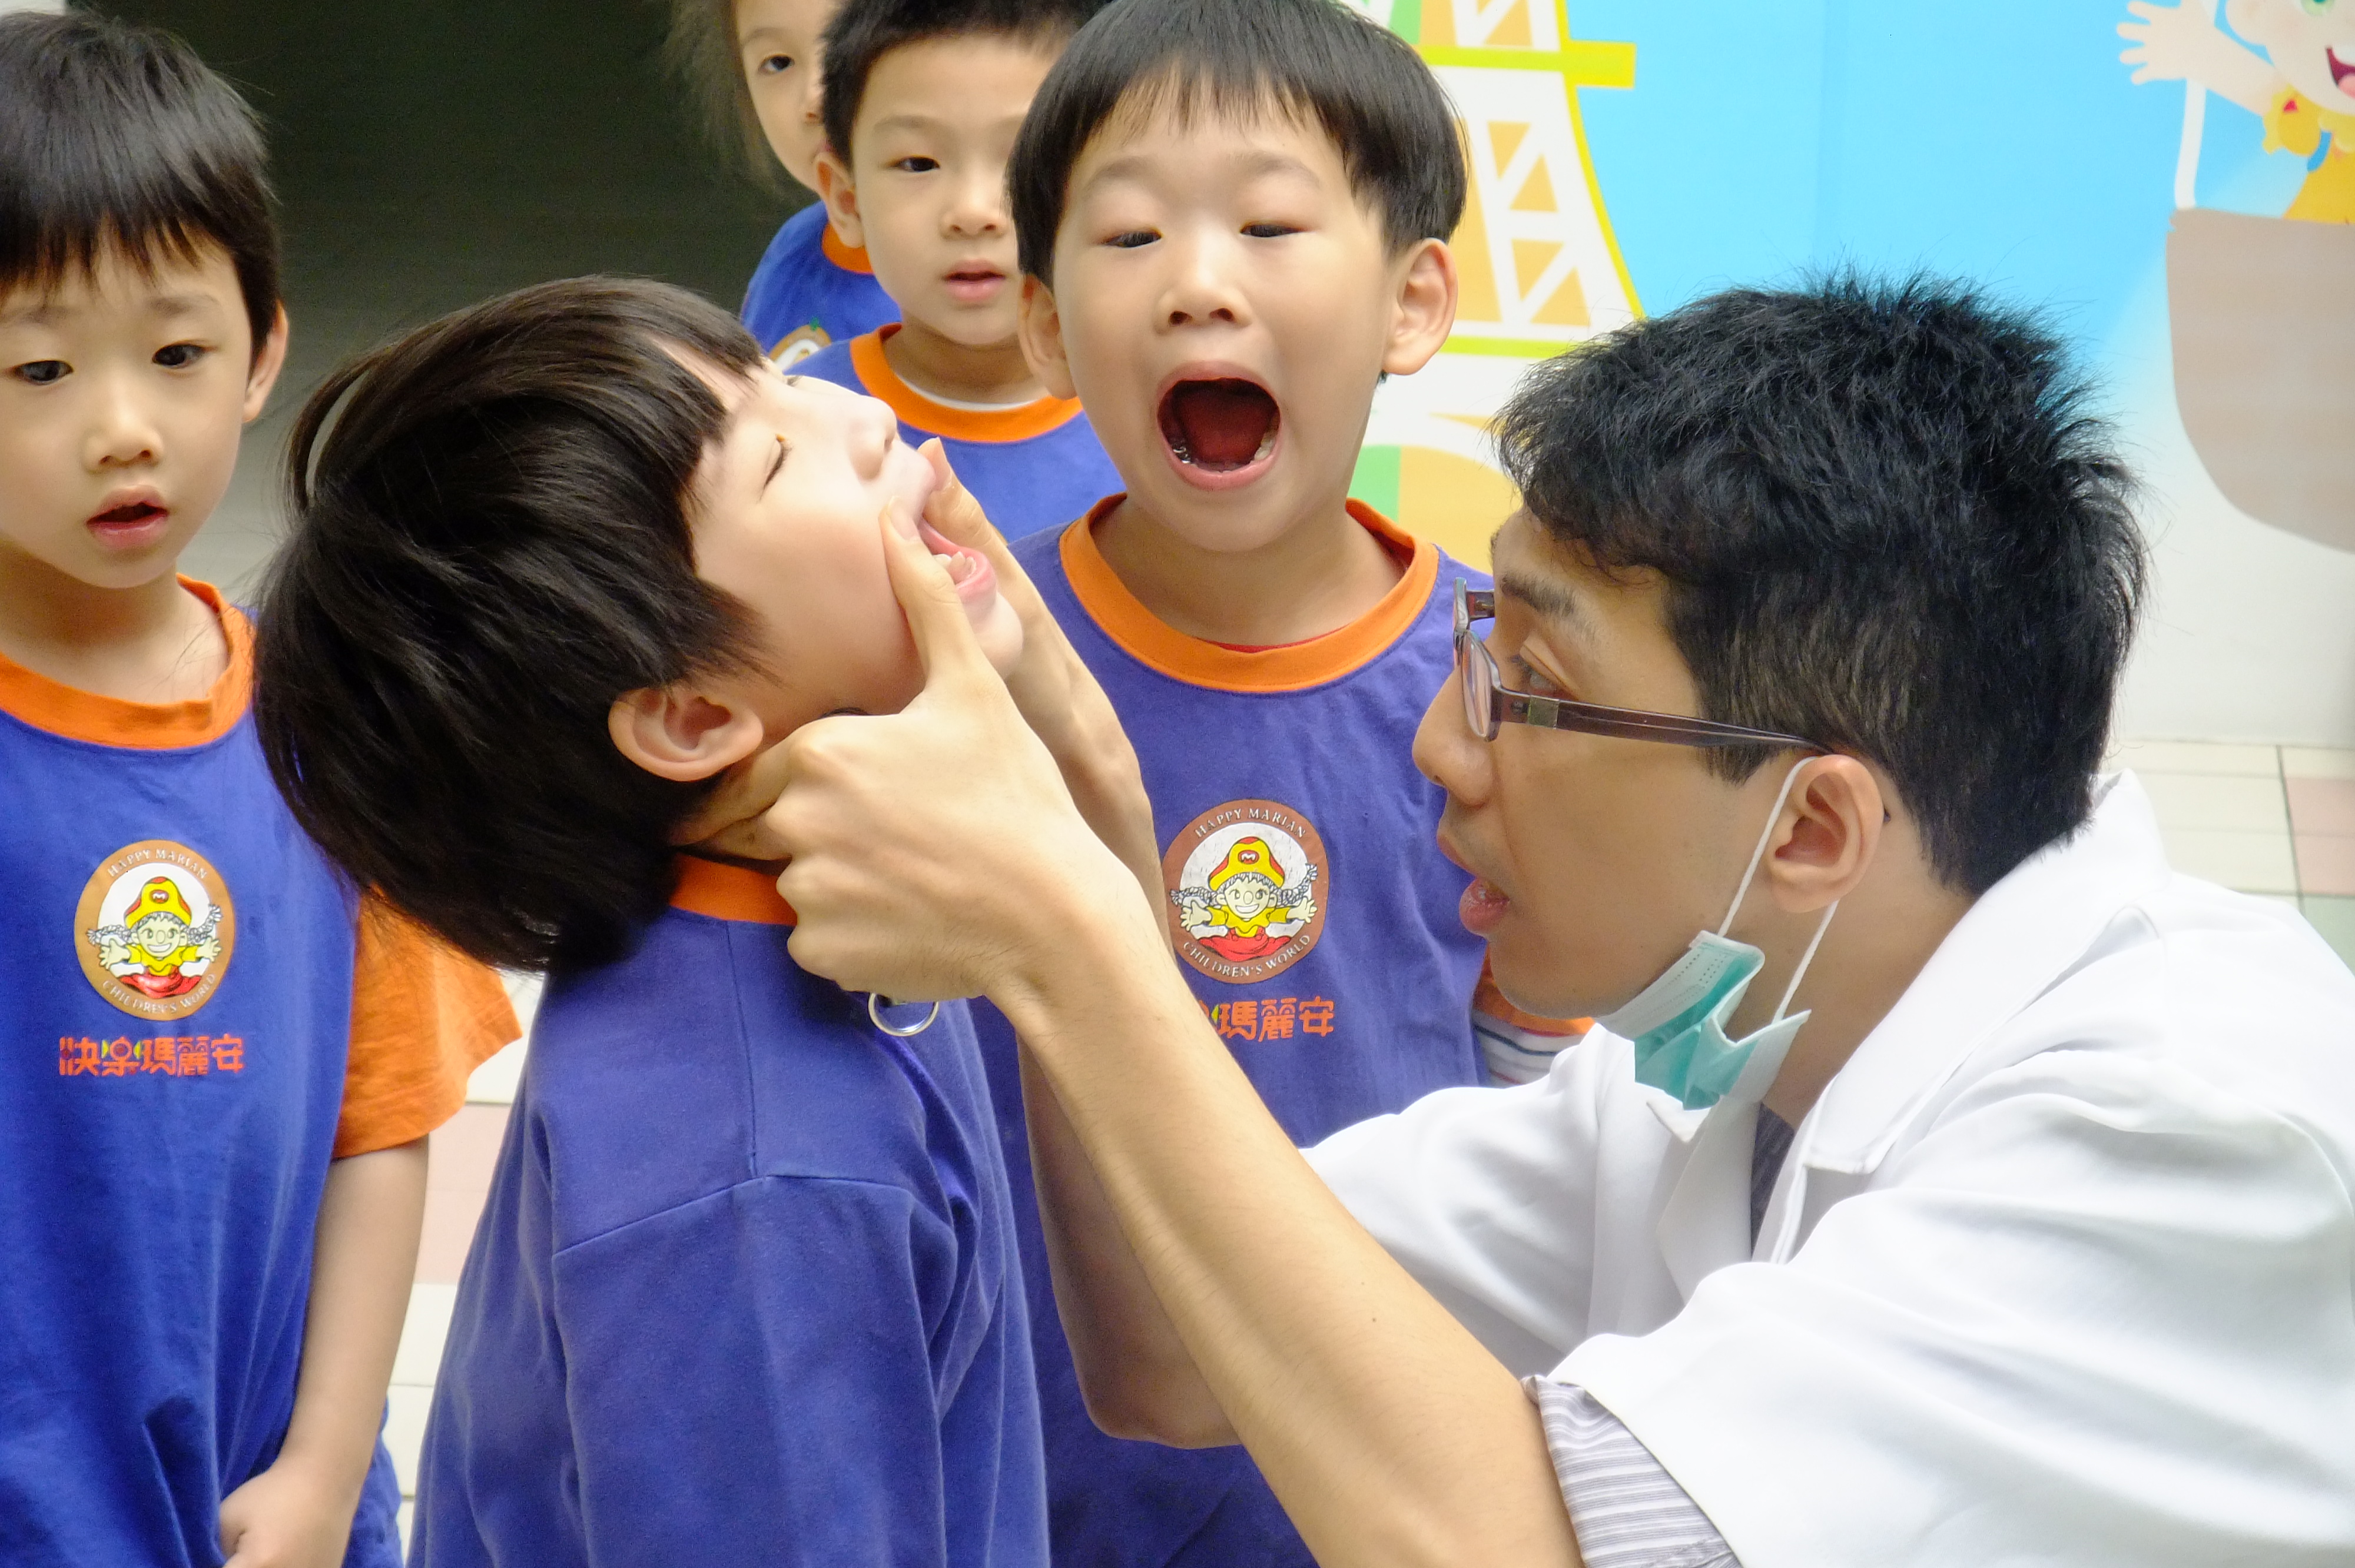 Integrative community oral cavity screening for pre-school children, 2011